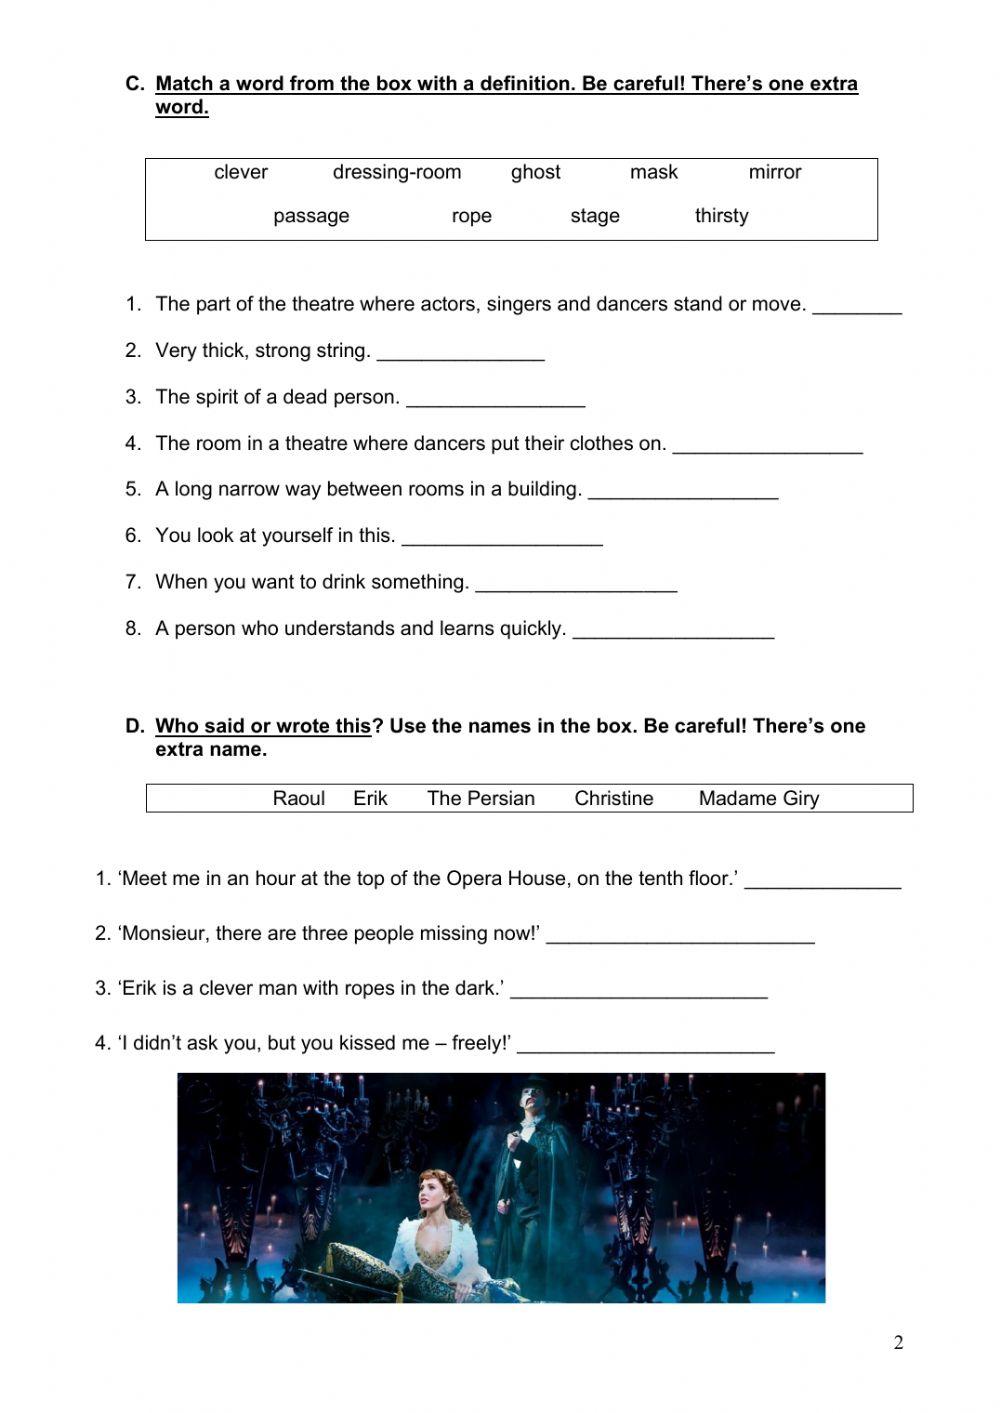 The Phantom of the Opera - Final Quiz